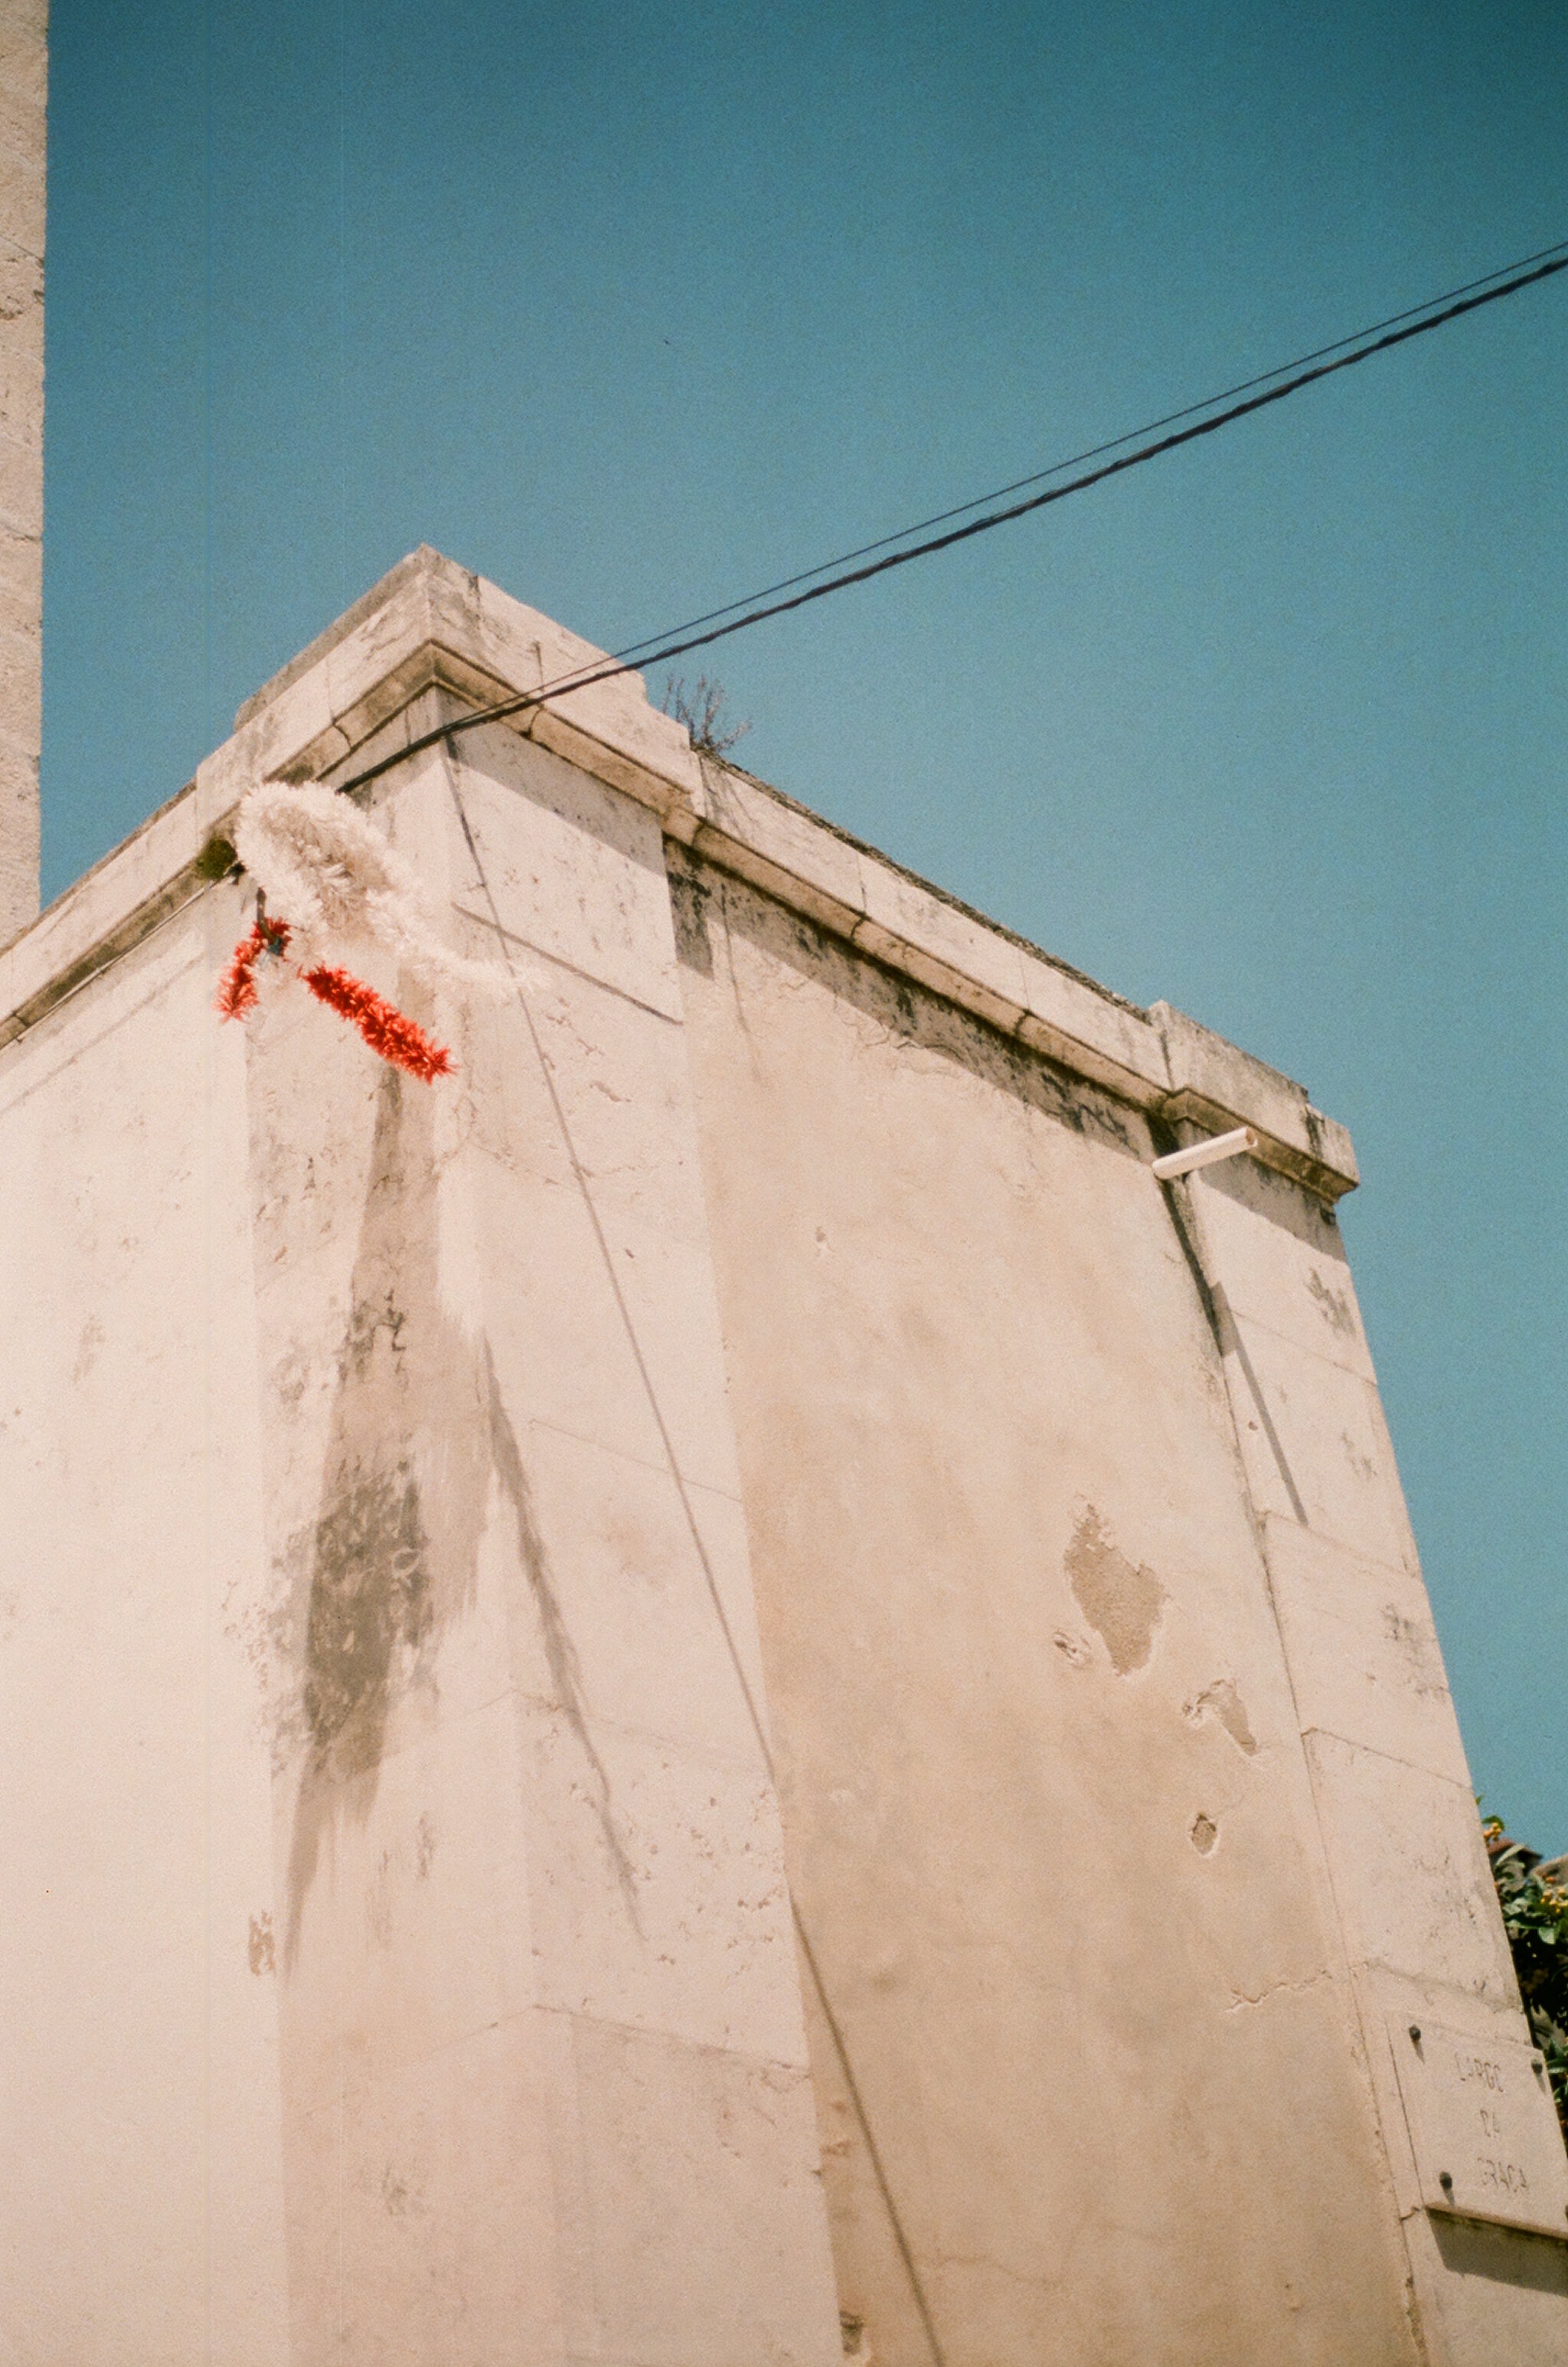  Graça, Lisbon  analog photograph  2019 